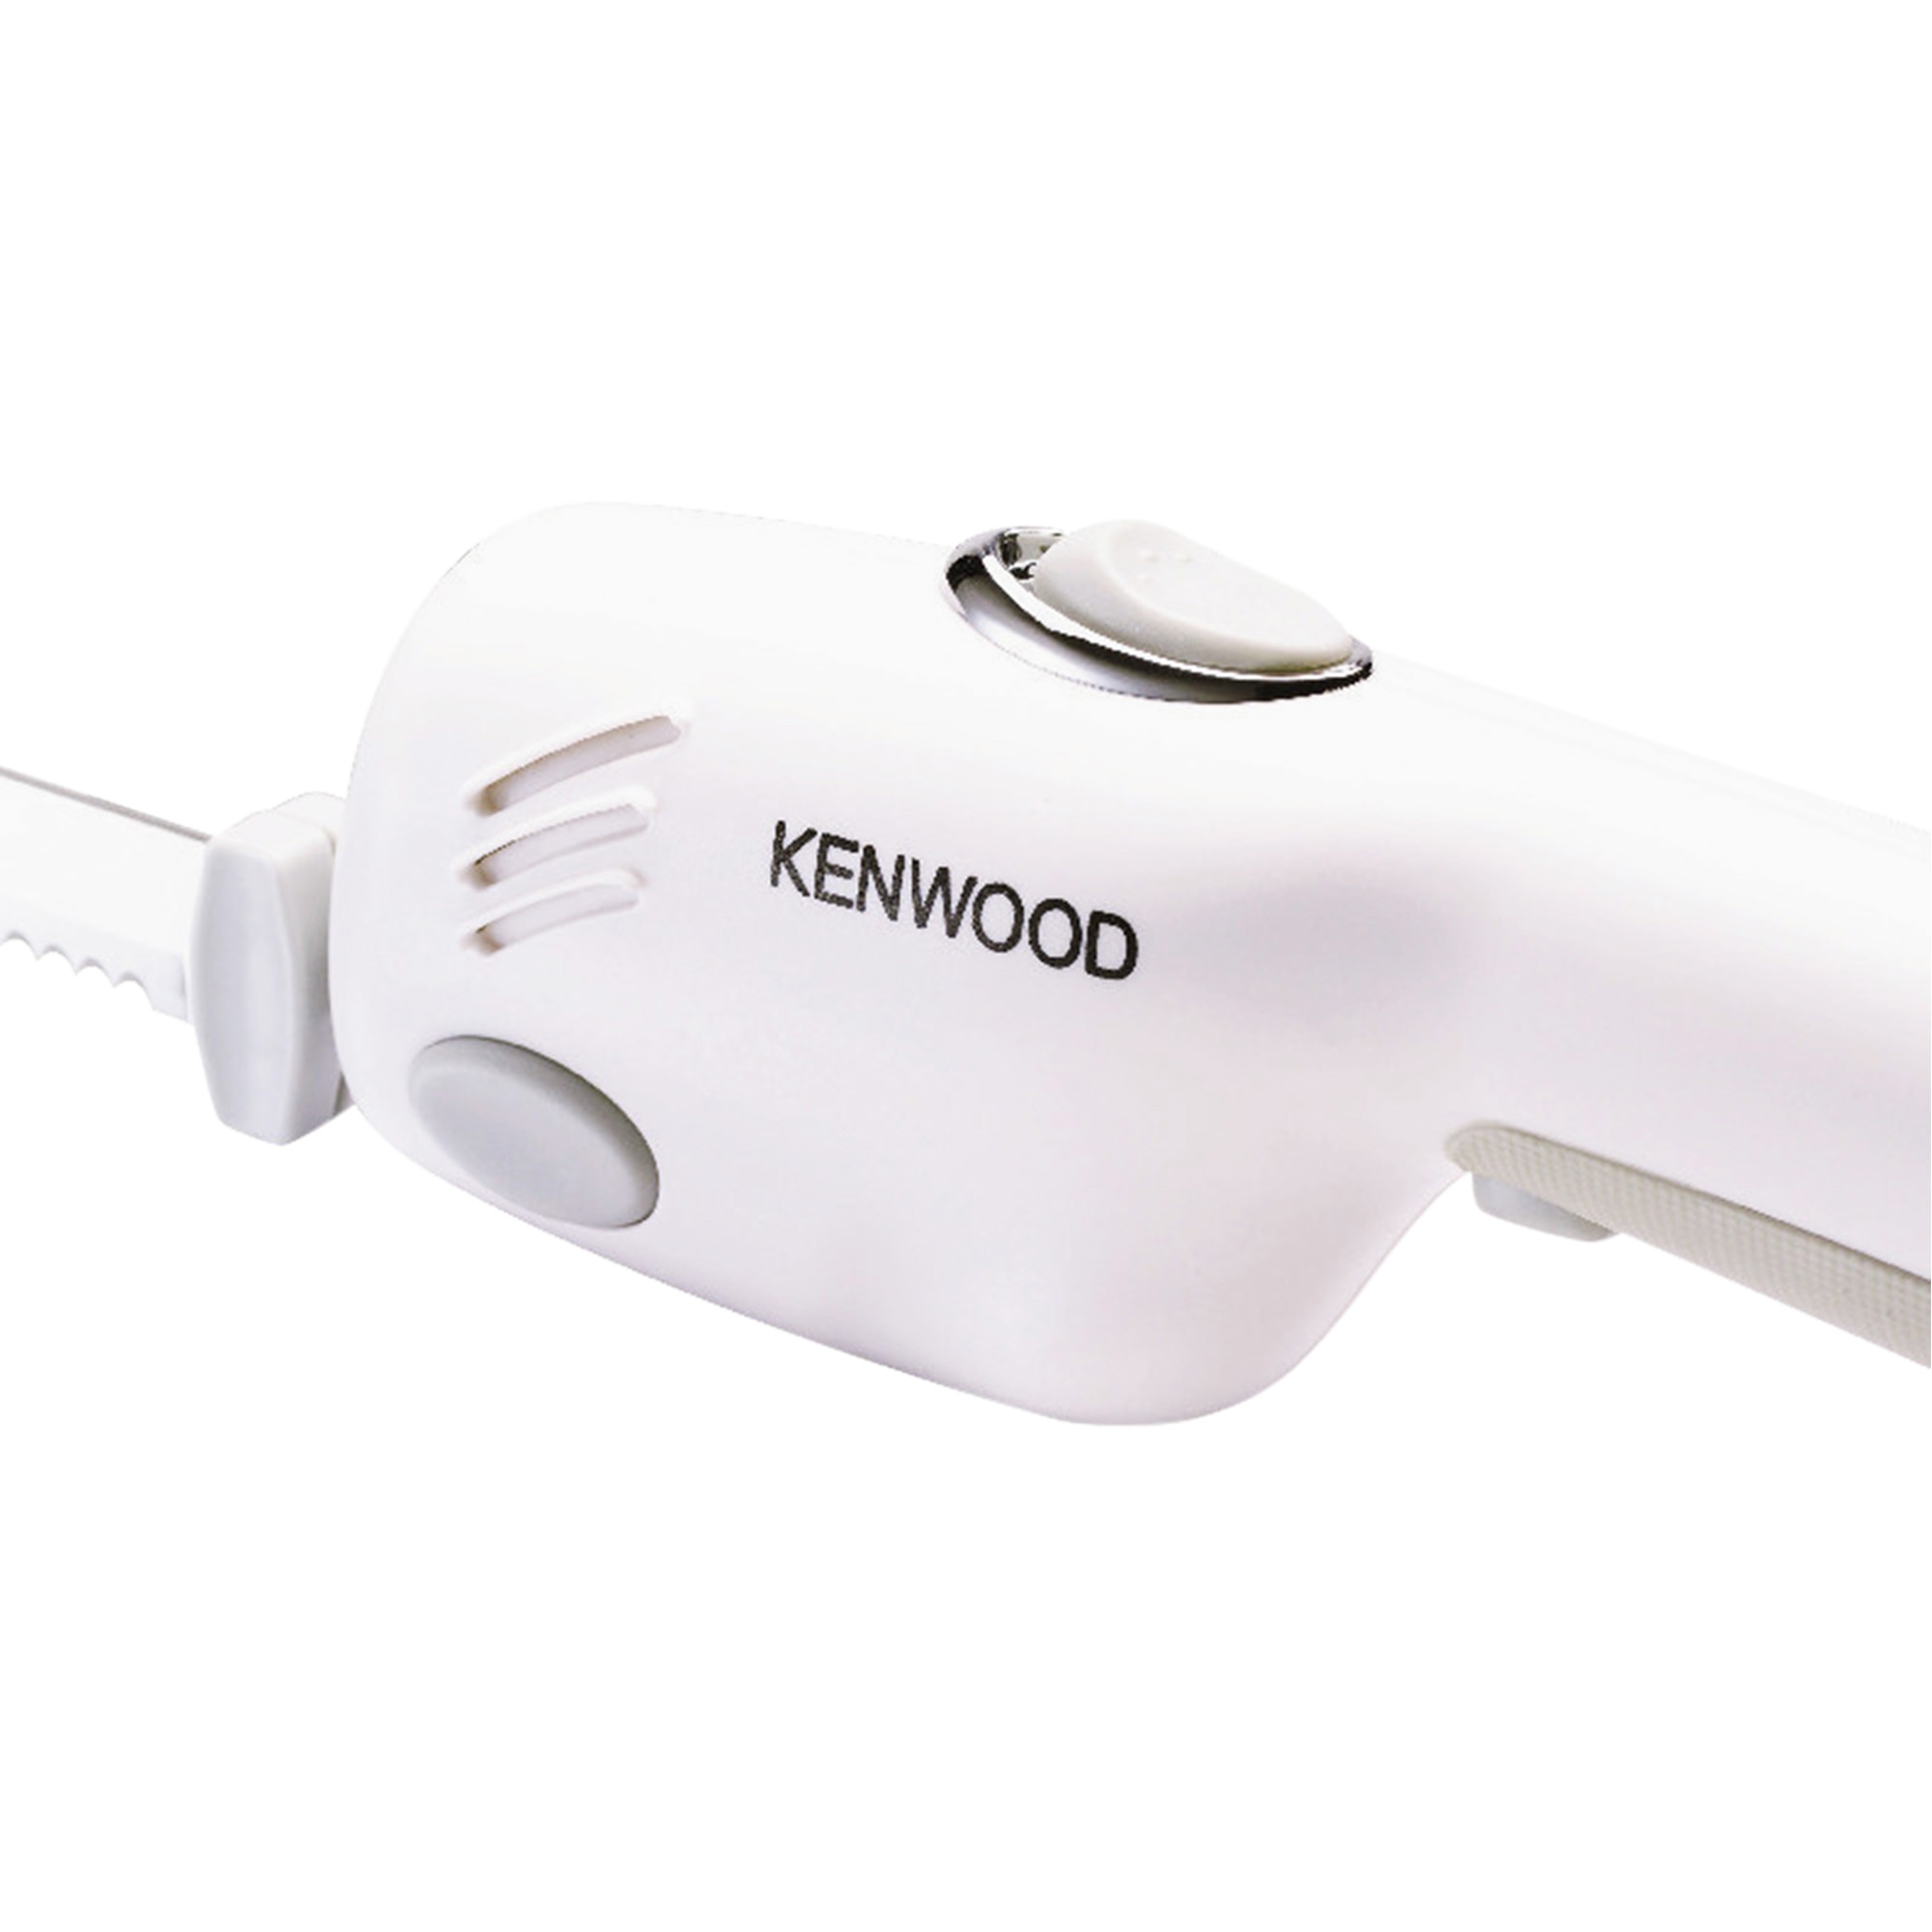 Kenwood KN500 Cordless Electric Knife Image 2